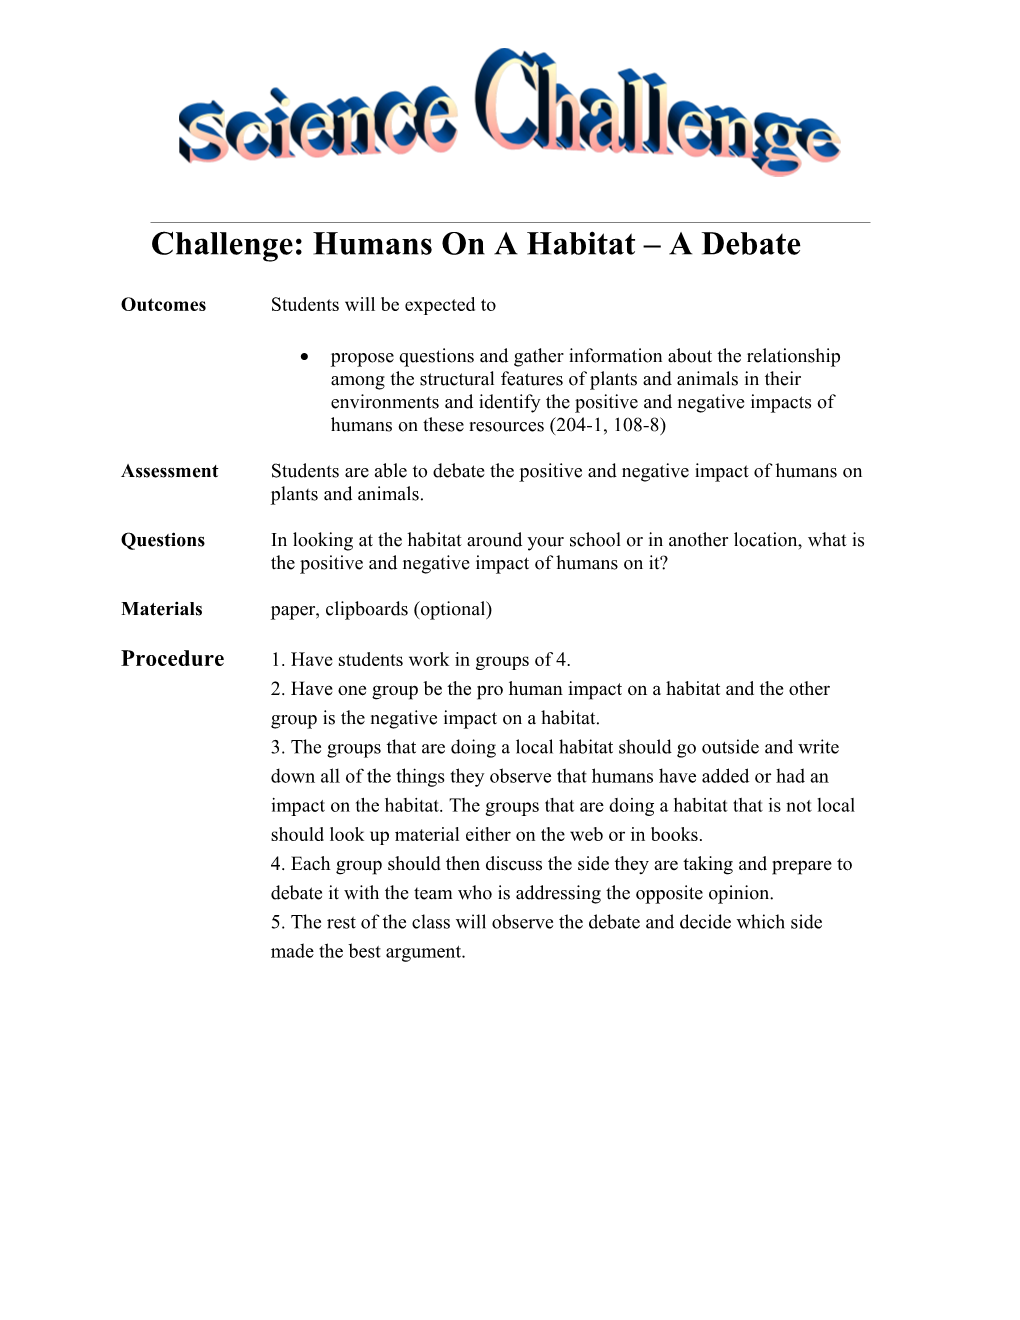 Challenge: Humans on a Habitat a Debate